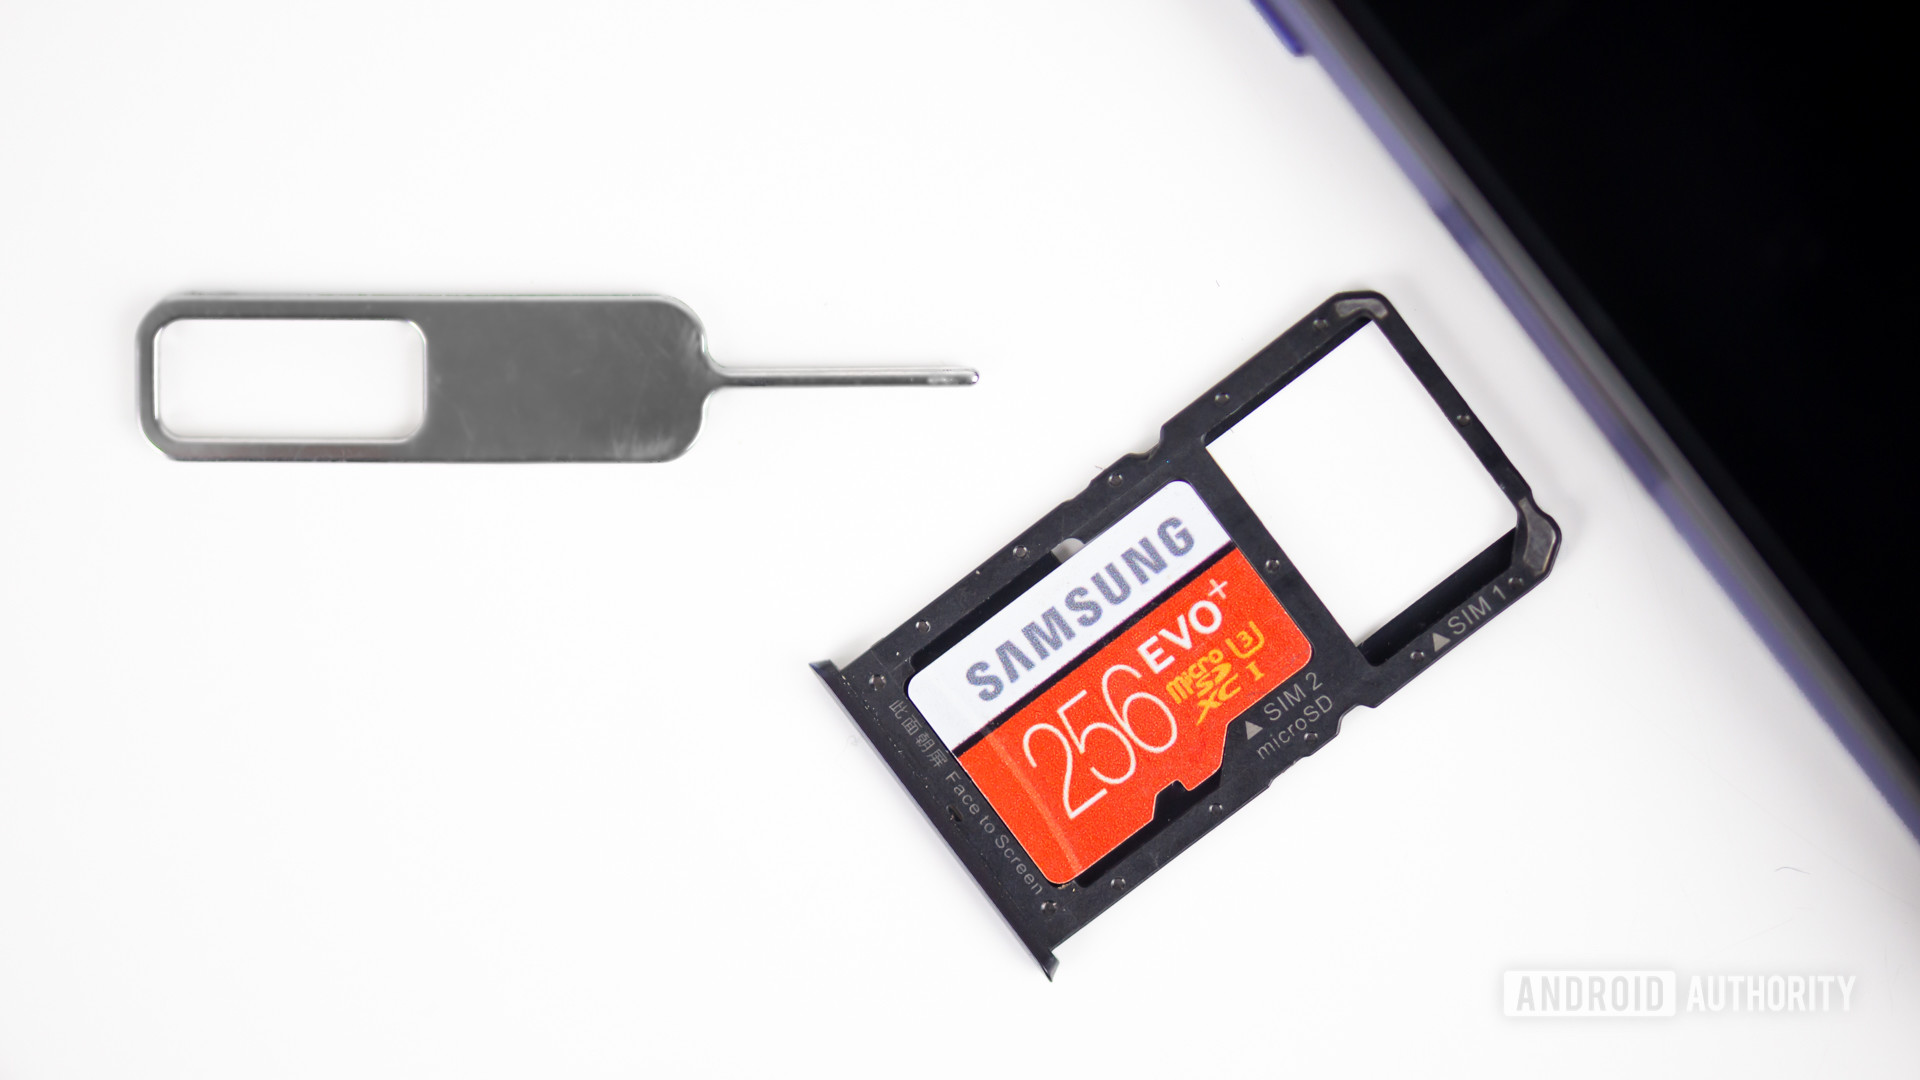 MicroSD card slot stock photo 5 Prime Day expandable storage